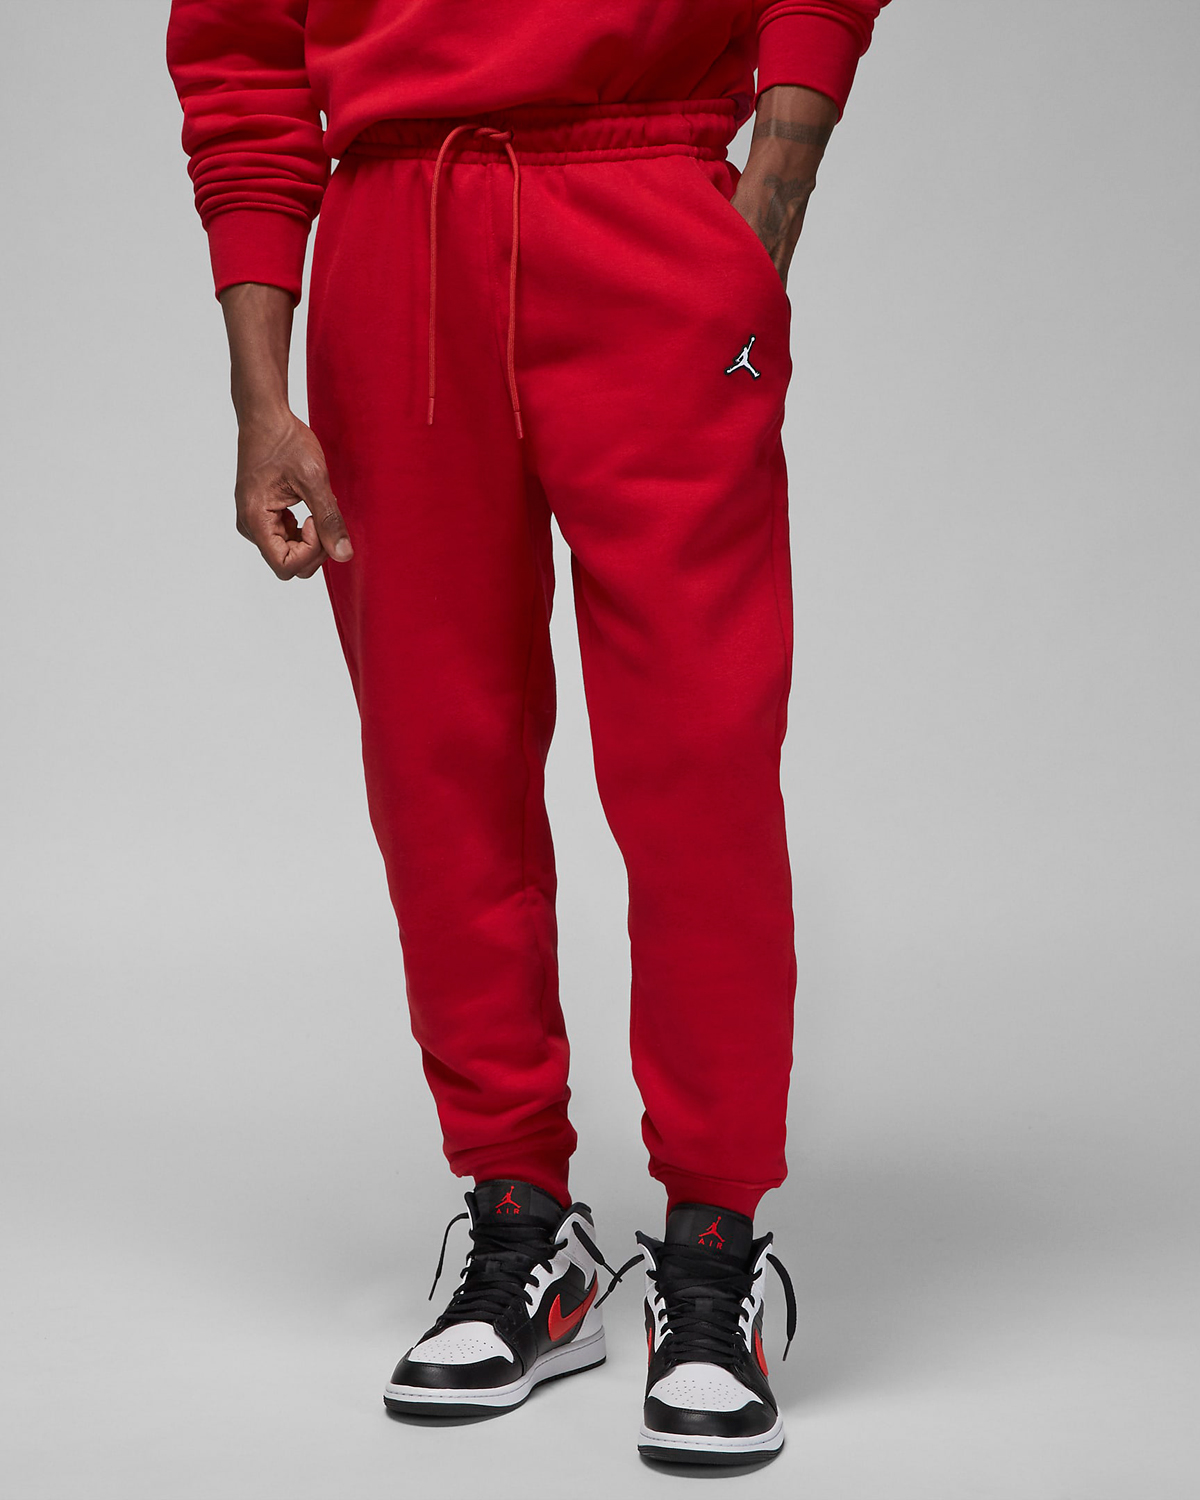 Air Jordan 1 Low Reverse Black Toe Shirts Clothing Outfits